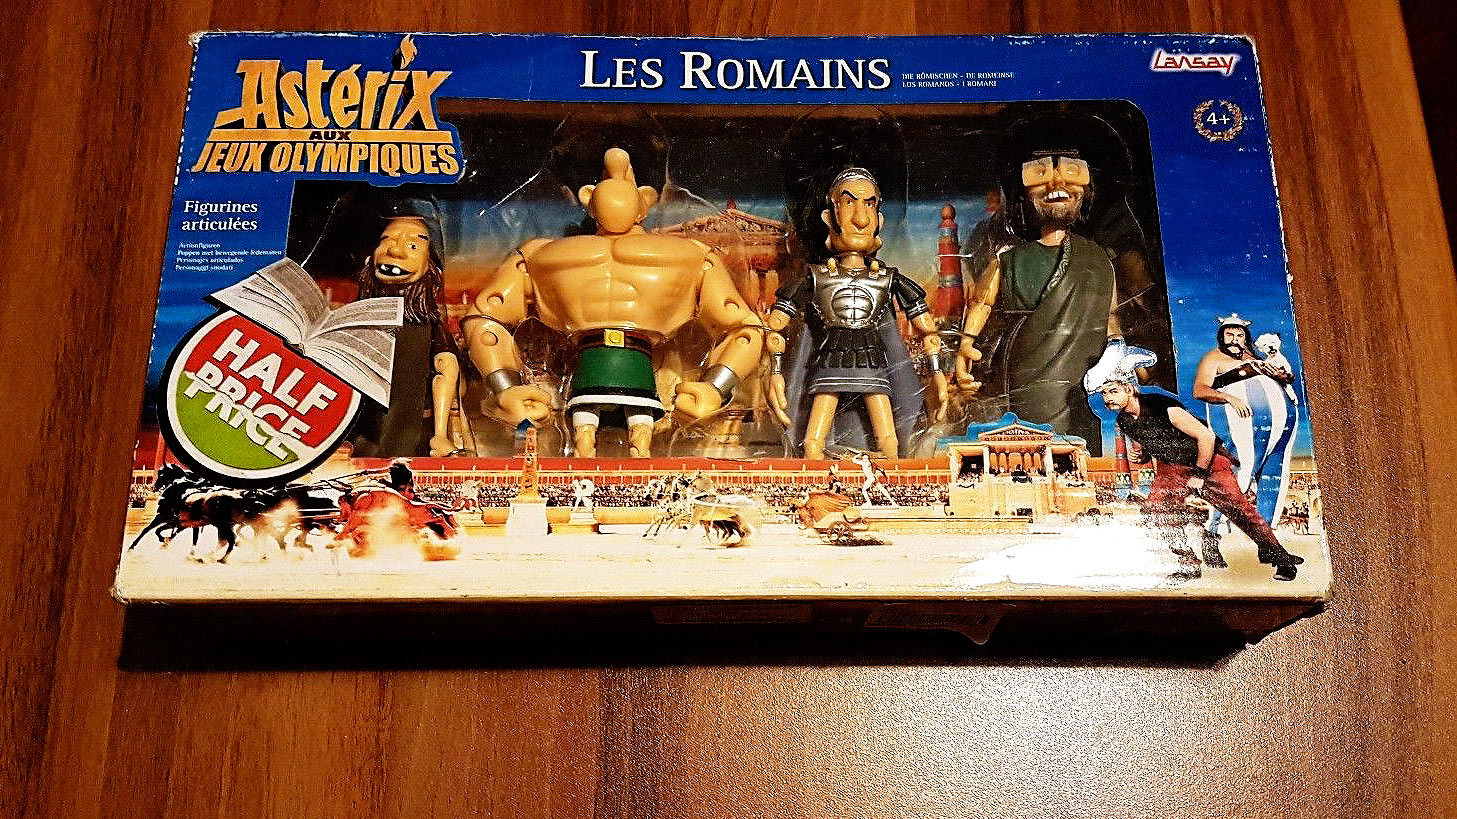 asterix-les-romains-jeux-des-olympiques-olympic-games-the-romans-asterix-action-figures-toys-games-2007